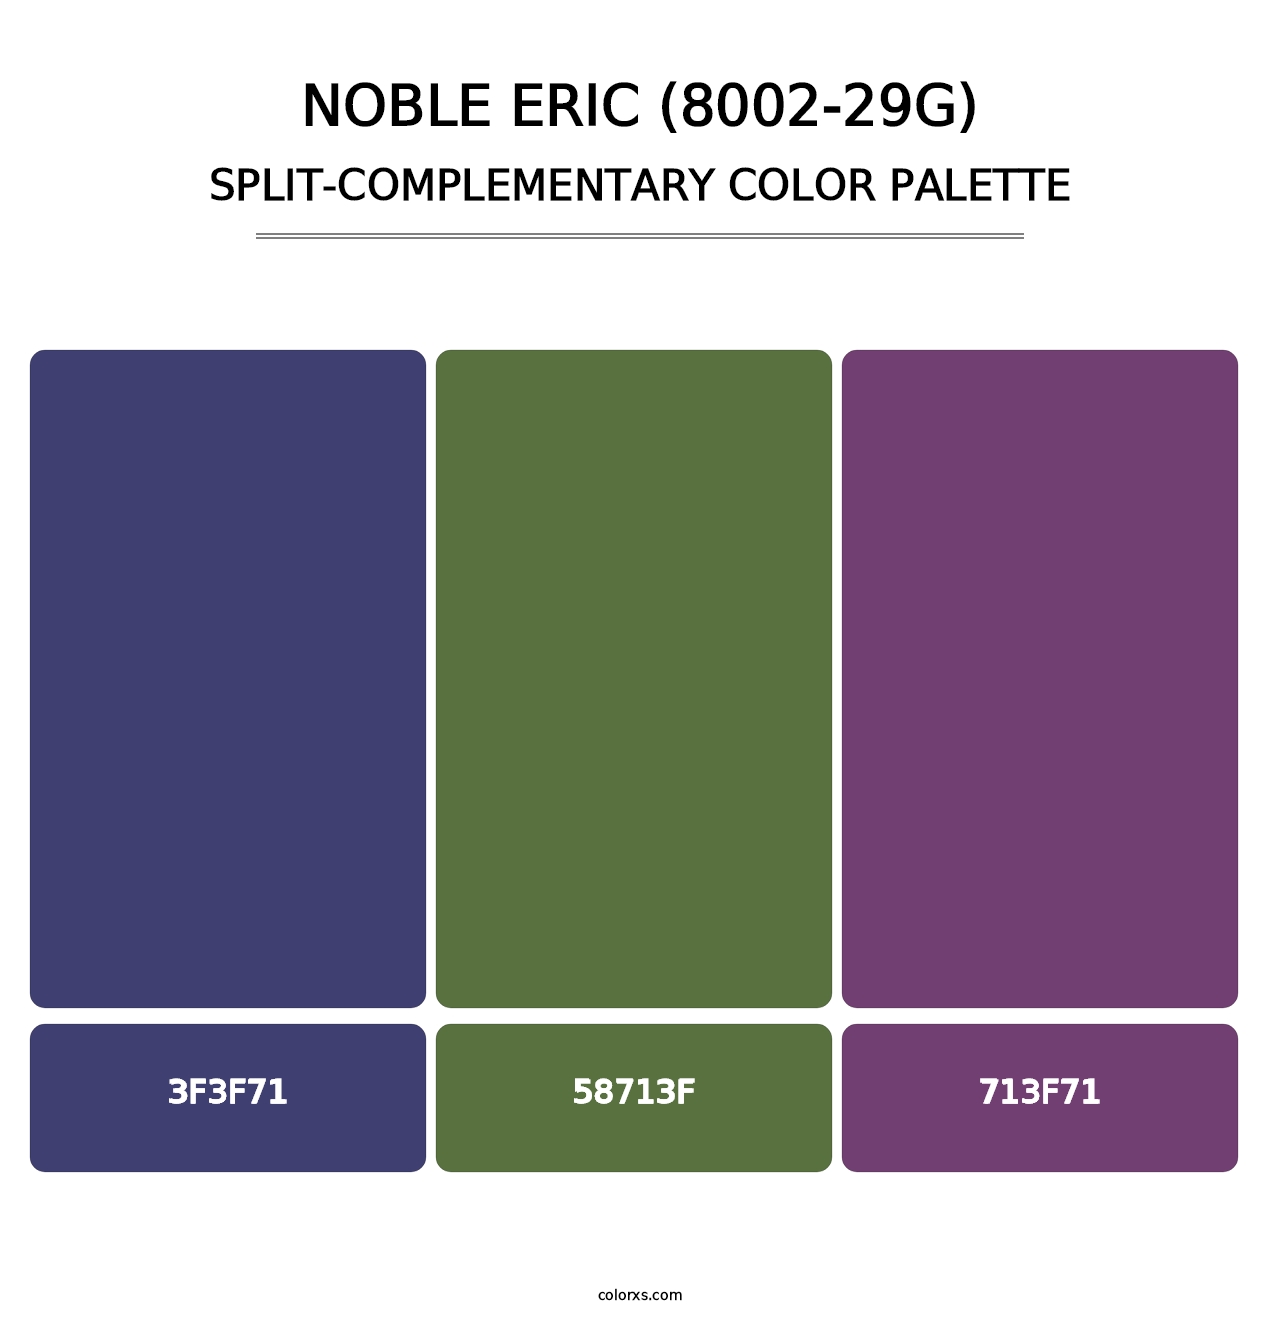 Noble Eric (8002-29G) - Split-Complementary Color Palette